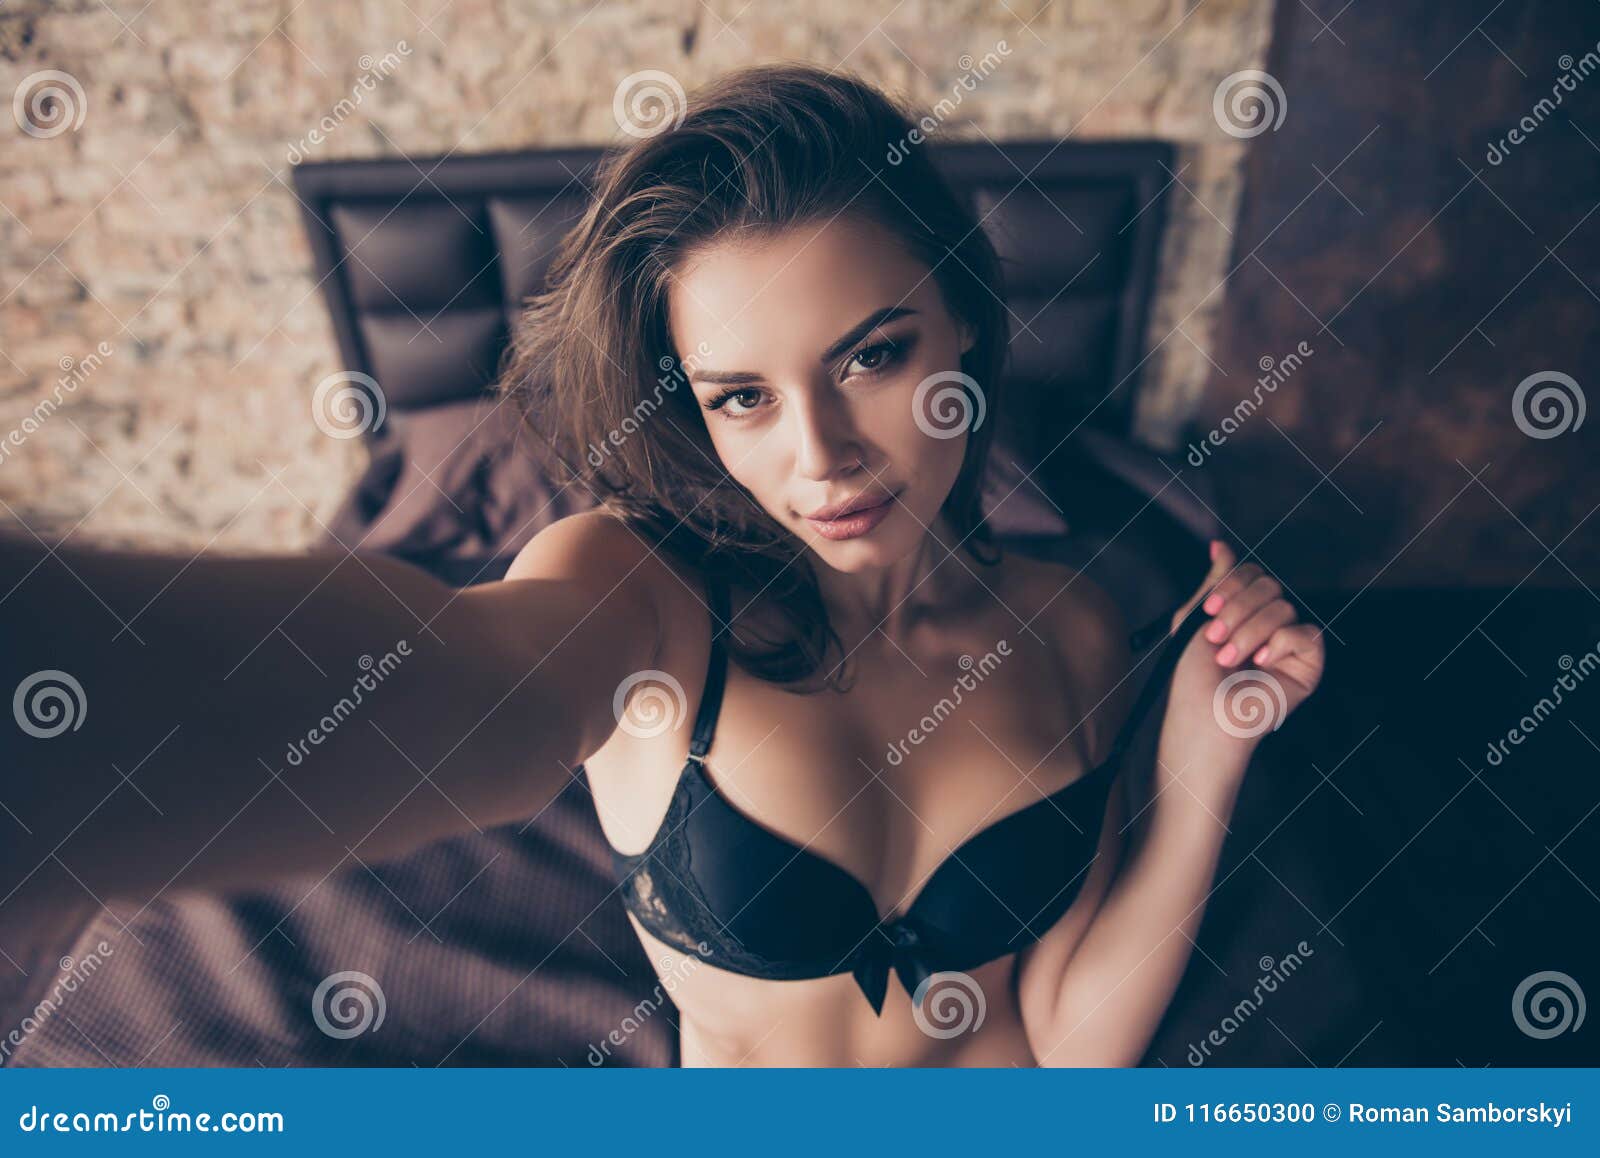 naughty women selfie hd sex photo